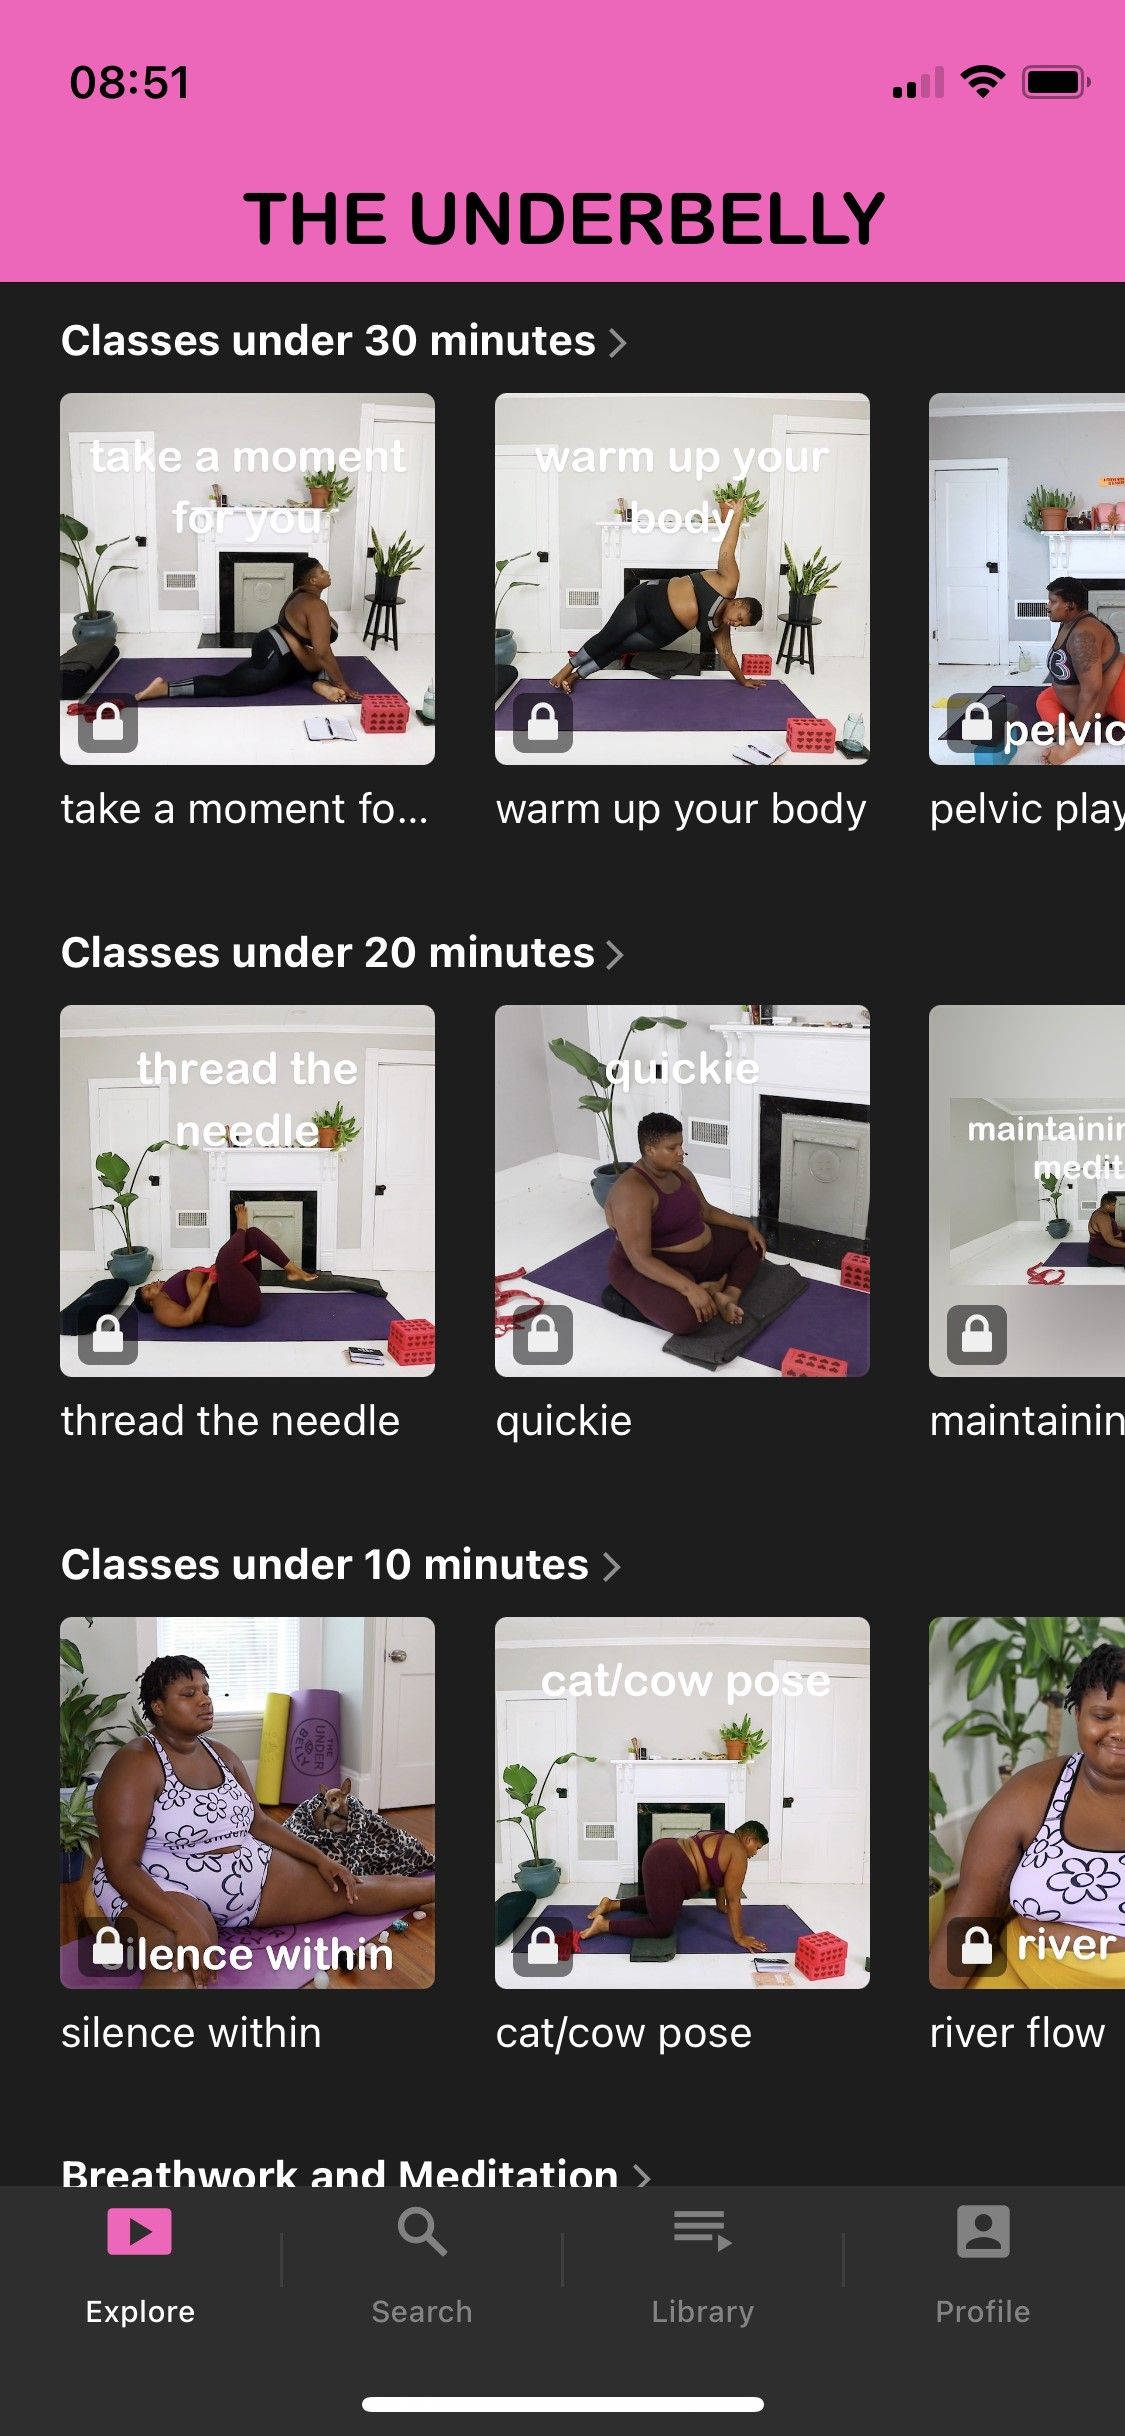 The Underbelly Yoga App screenshot